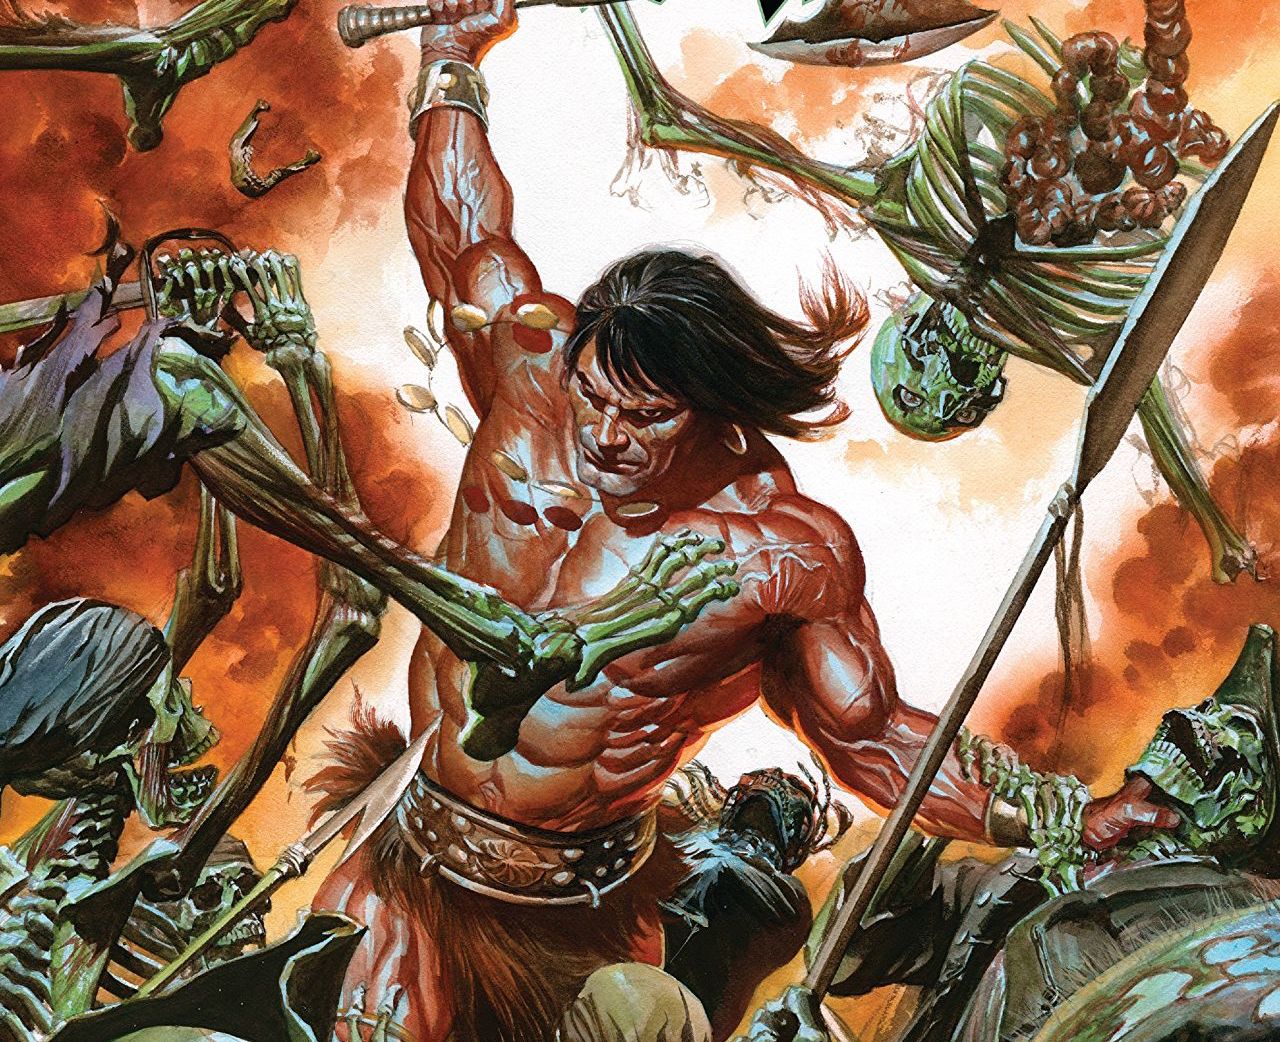 EXCLUSIVE Marvel Preview: Savage Sword of Conan #1